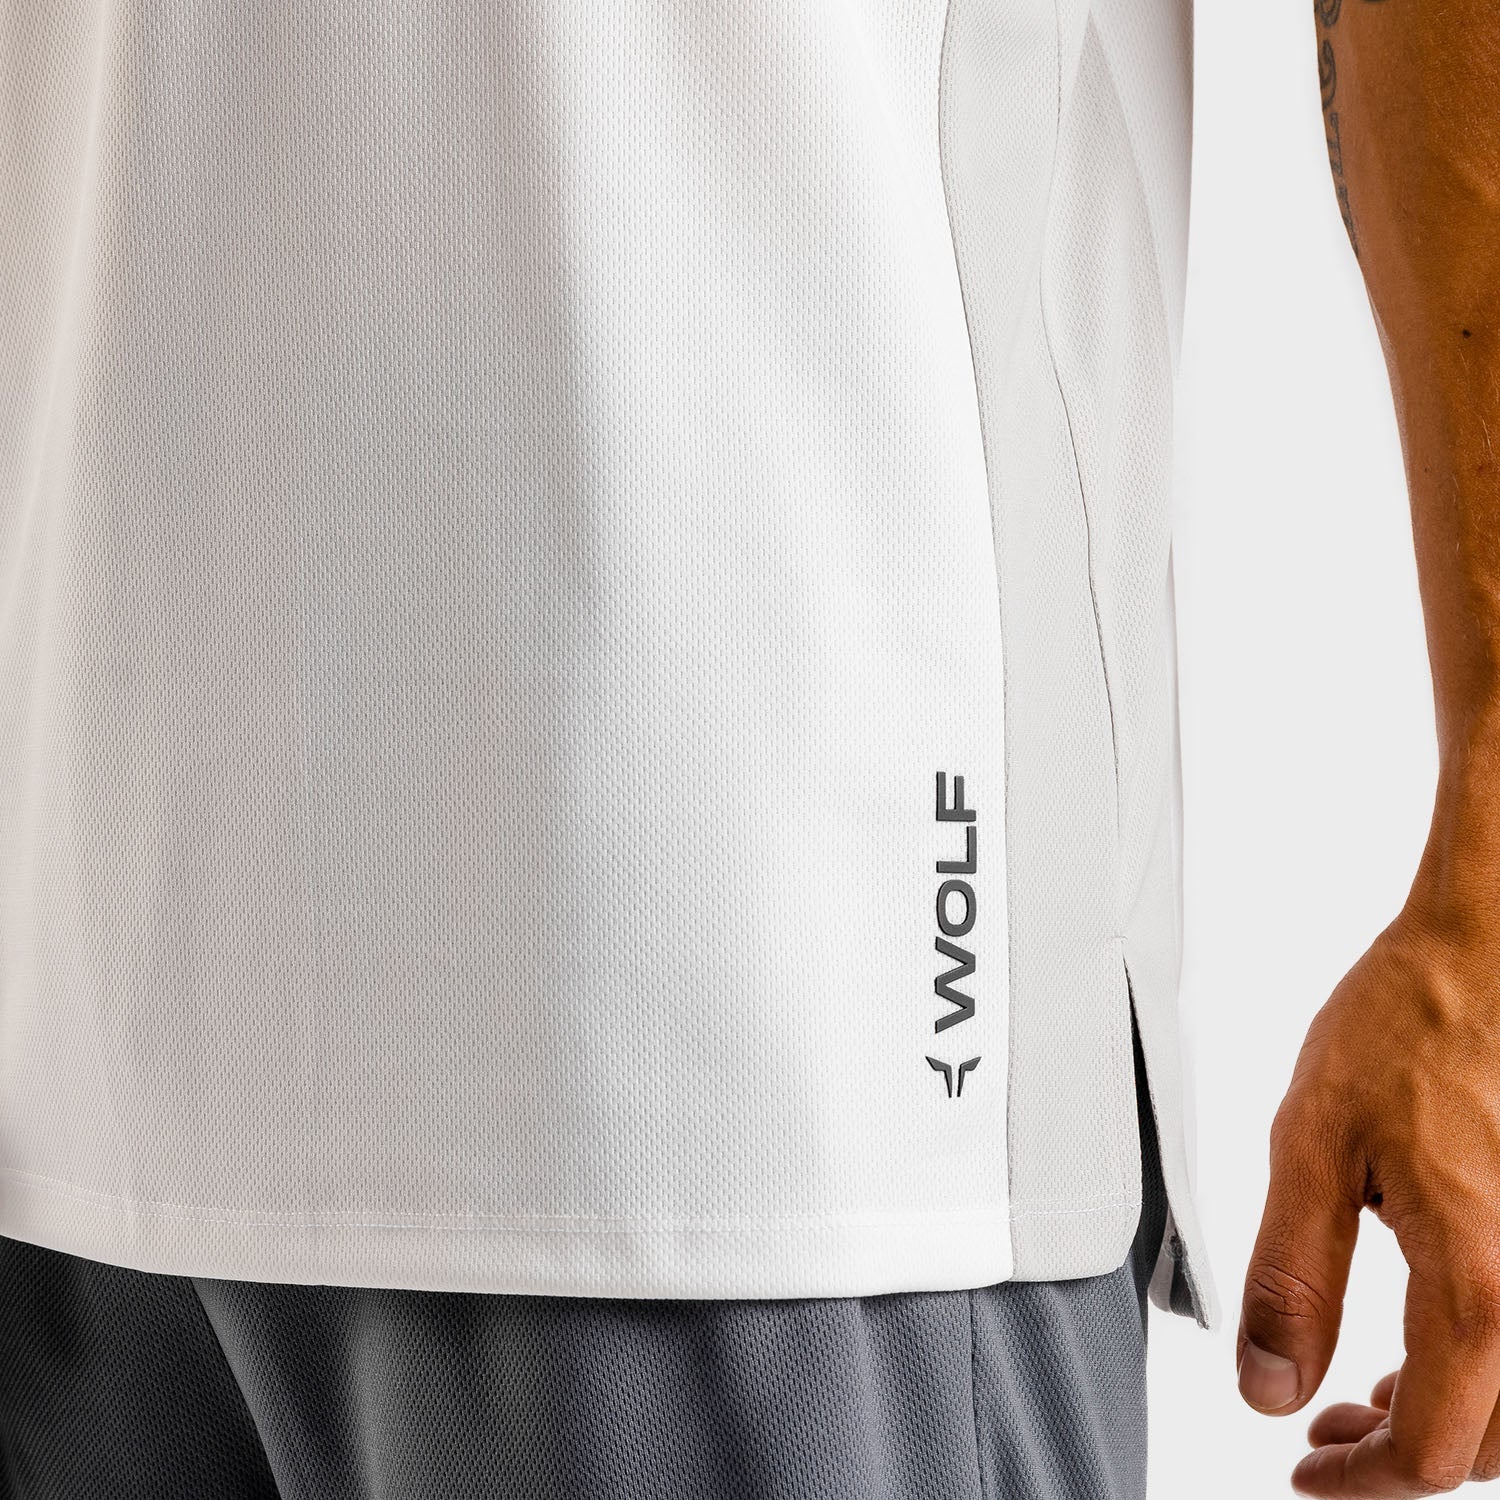 squatwolf-workout-tank-tops-for-men-flux-basketball-tank-white-gym-wear